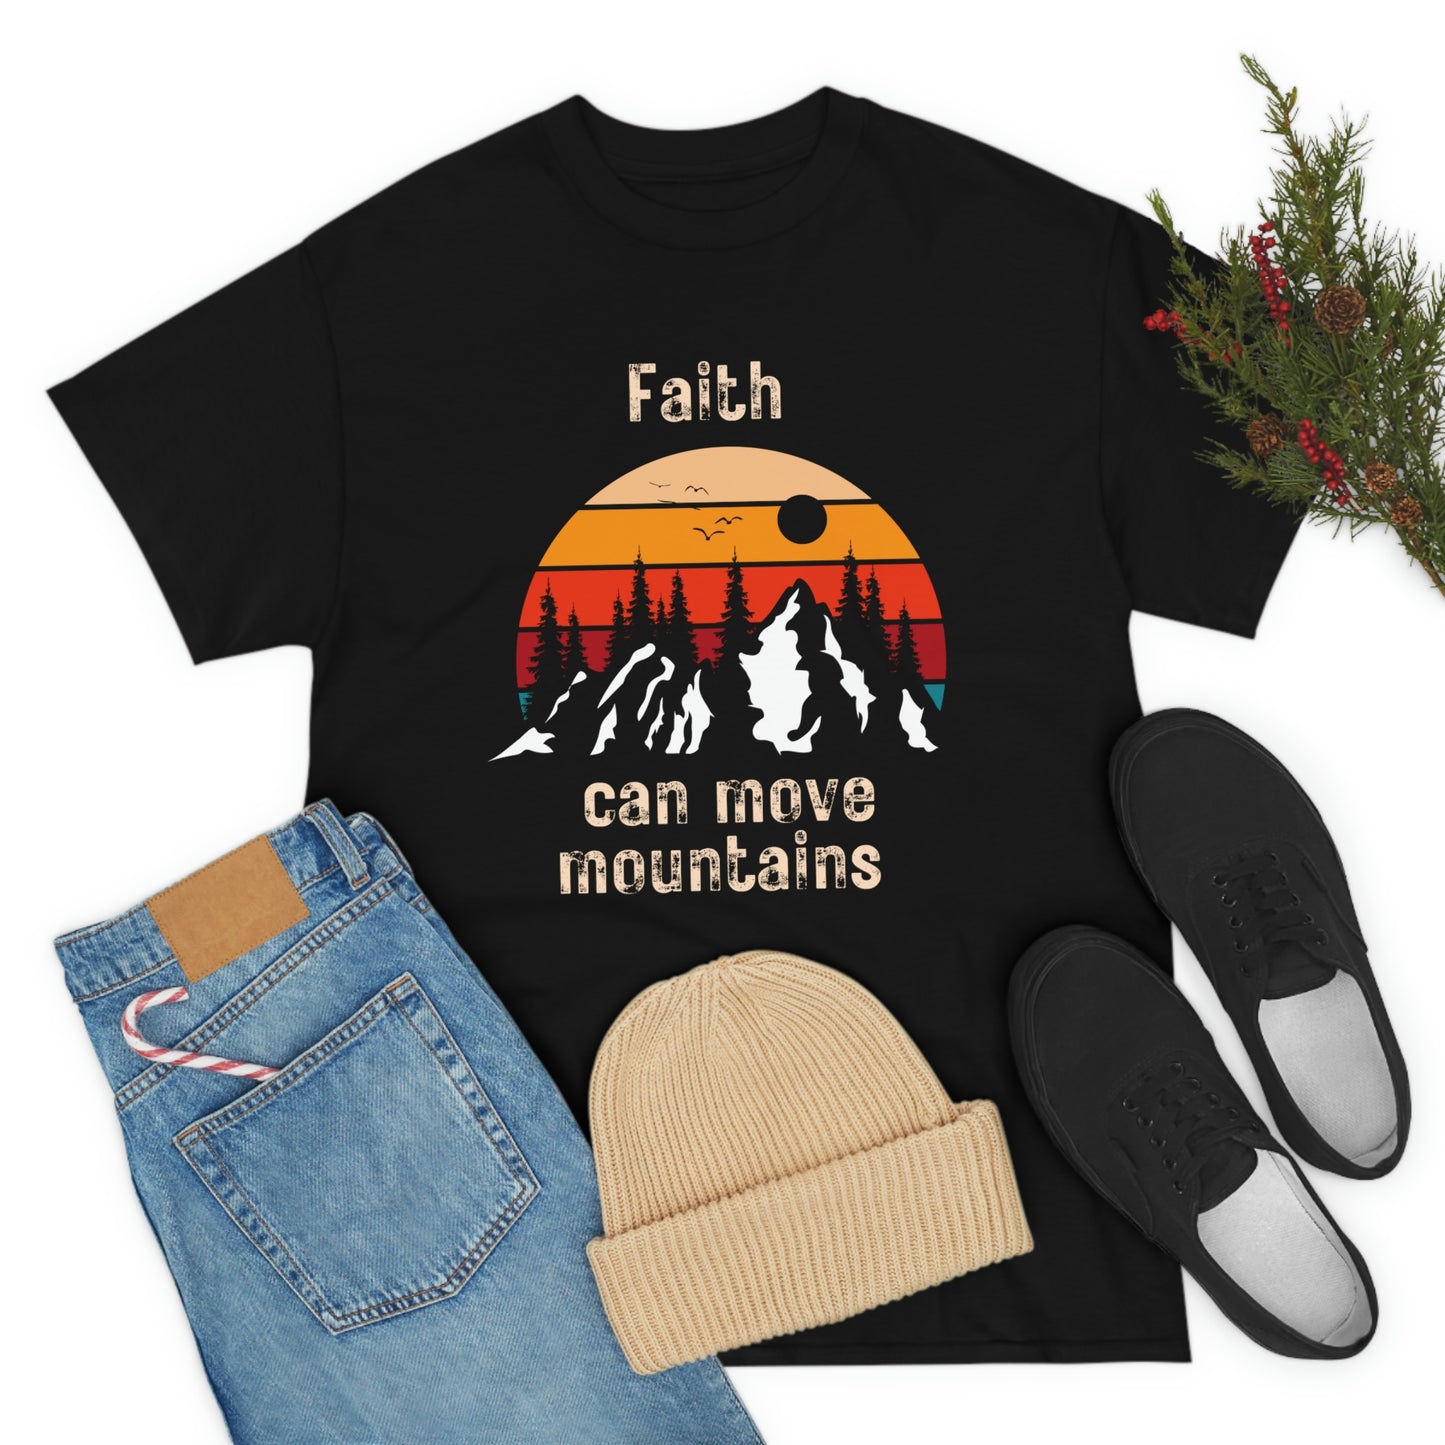 Faith - Men's Christian Cotton Tee